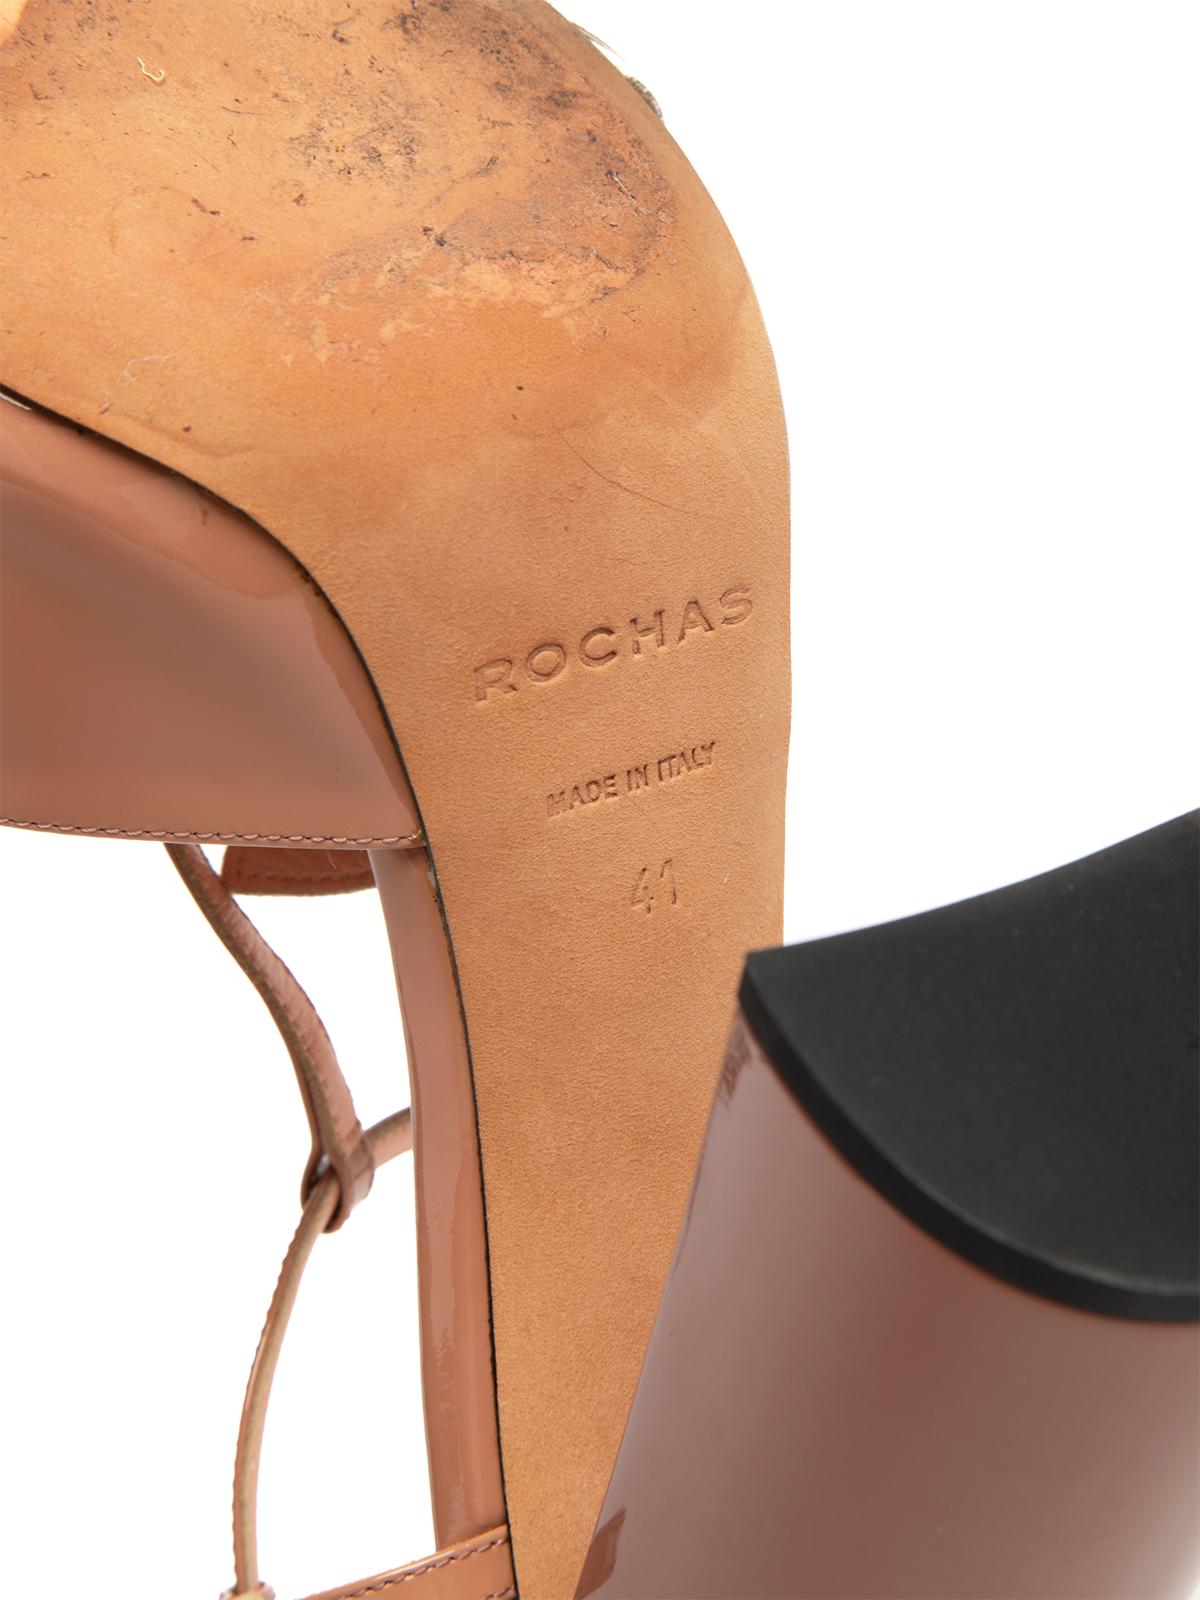 Pre-Loved Rochas Women's Patent Leather Block Heels Shoes 4